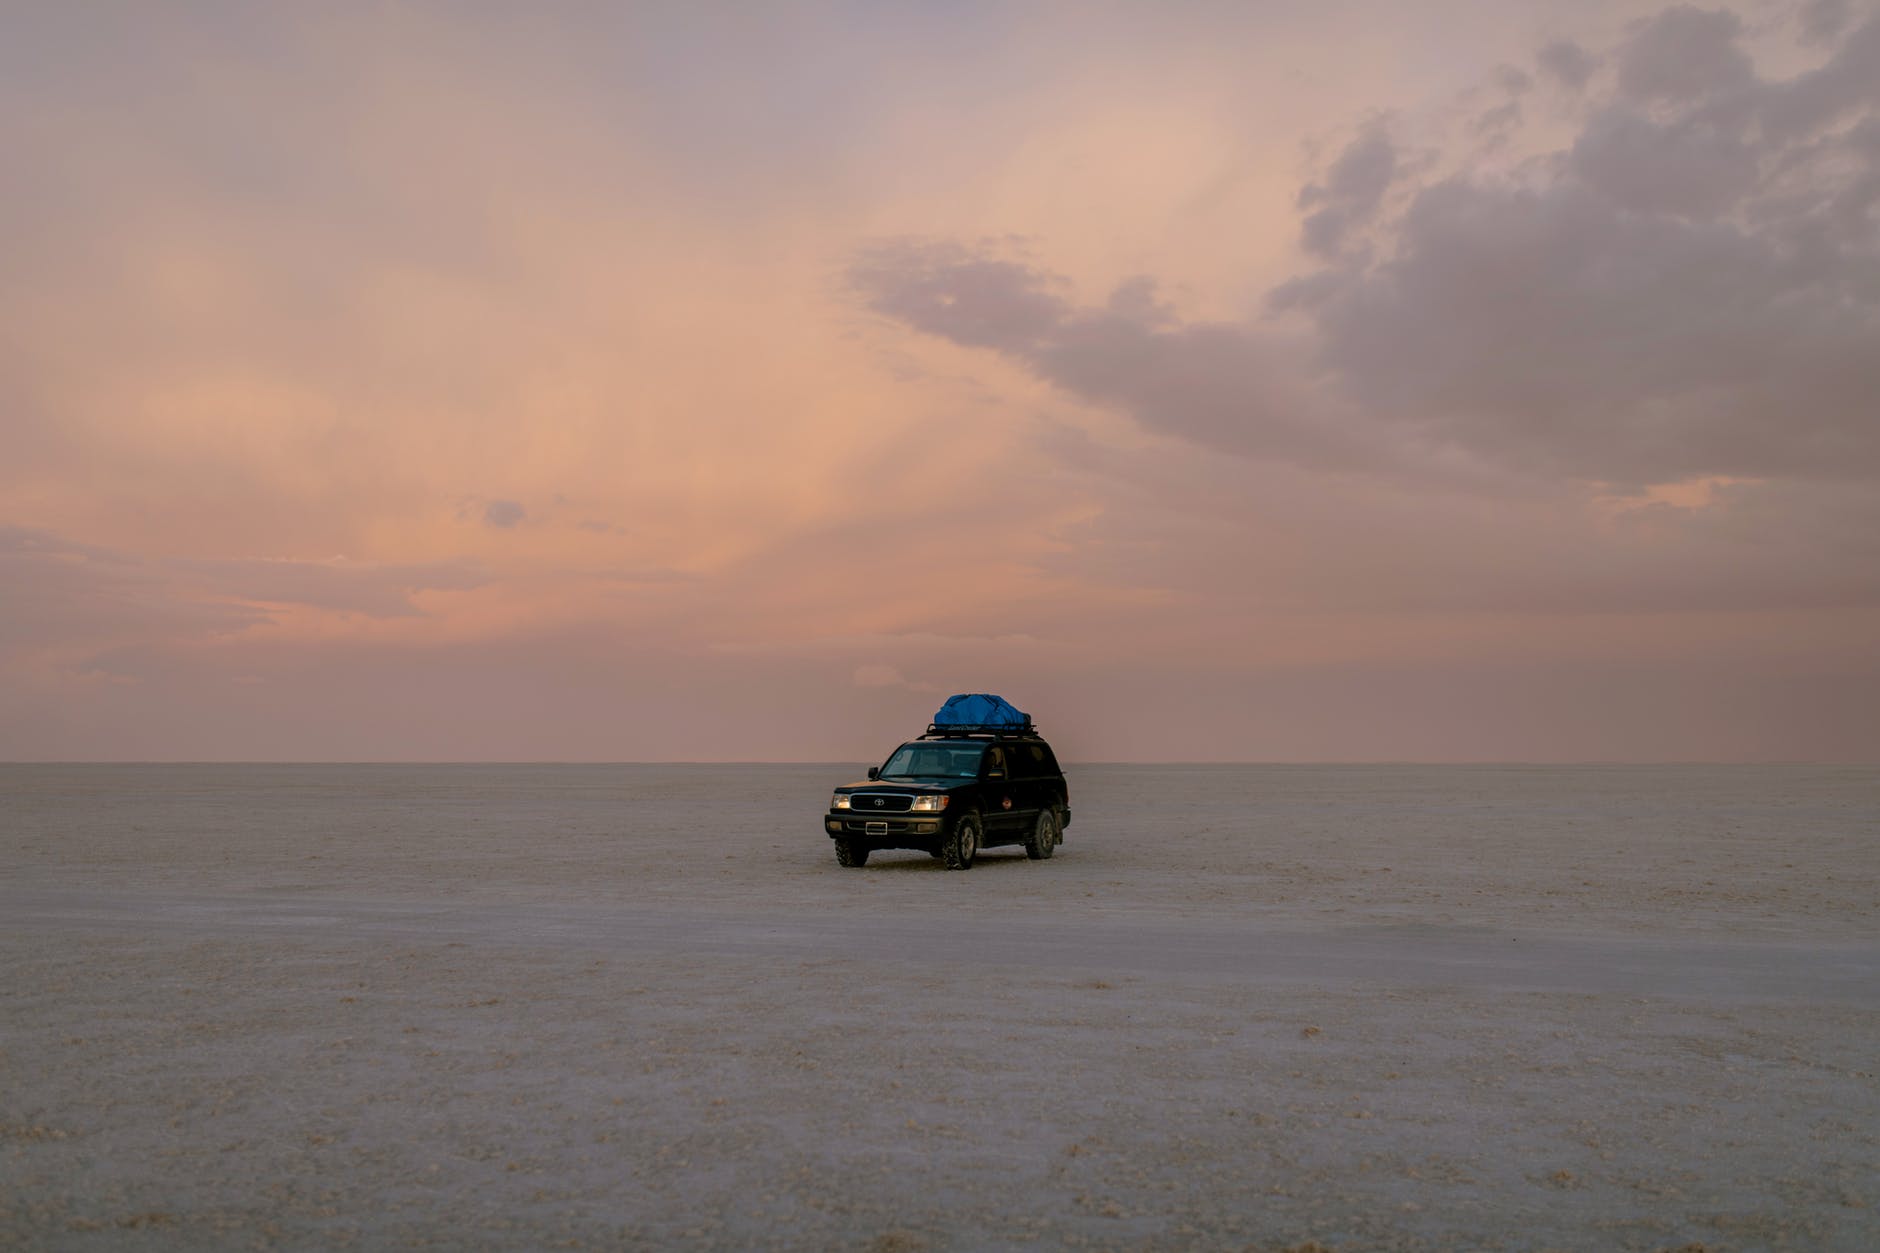 car driving in empty desert in evening